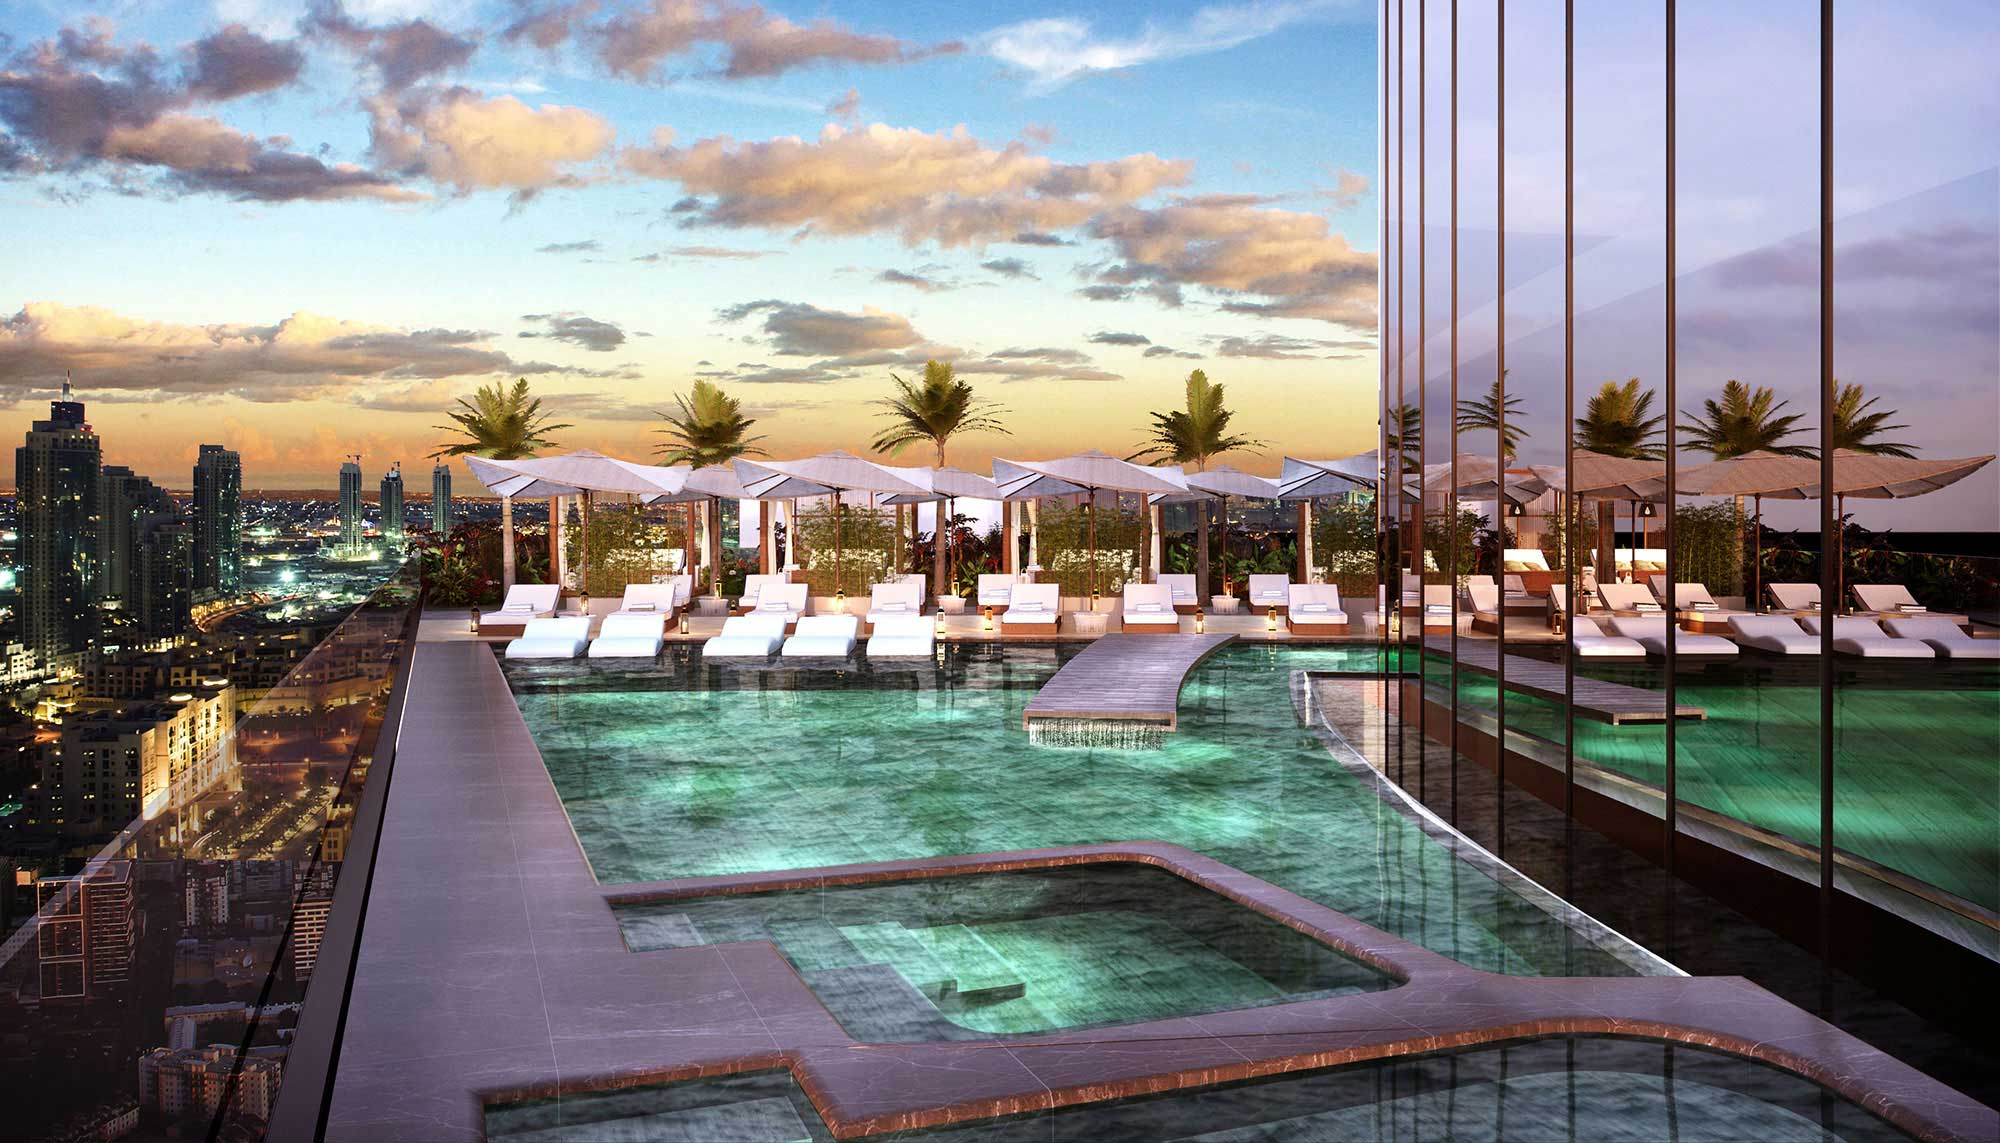 Interior Design Project Five Star Hotel In Dubai Uae avec 3 Star Hotels In Kanto 